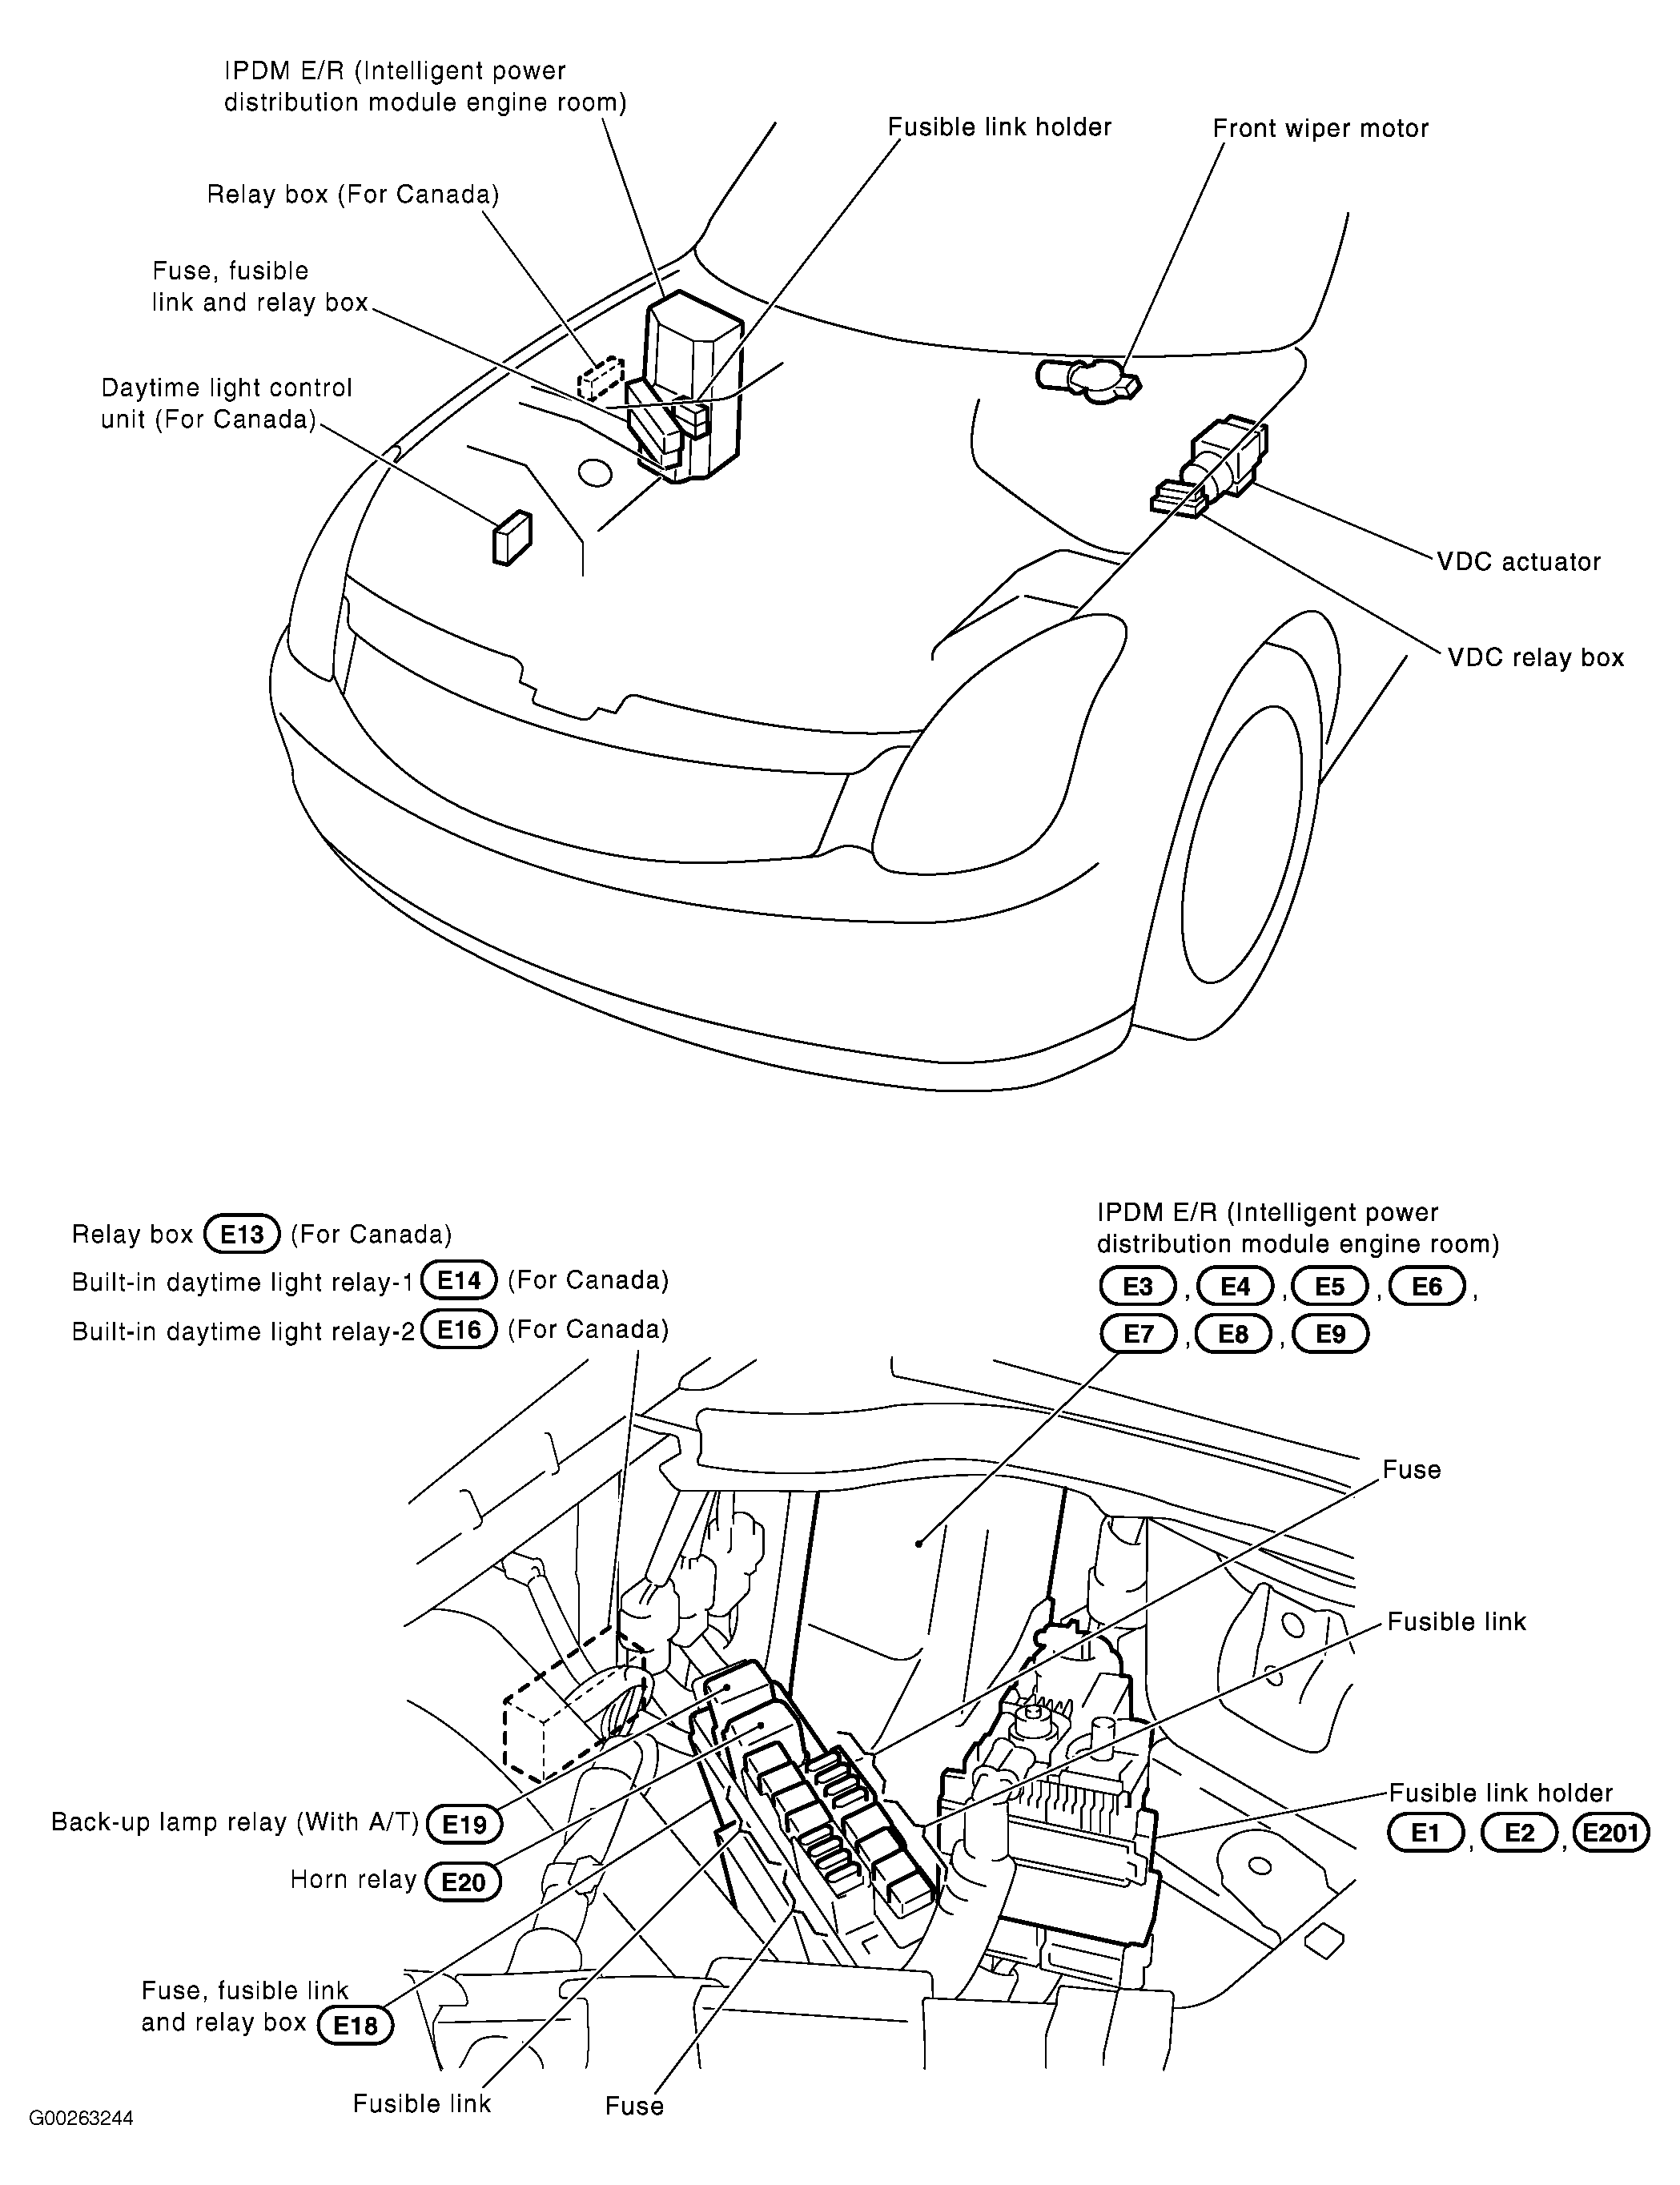 2005 Infiniti G35 Fuse Box Location - Wiring Diagram